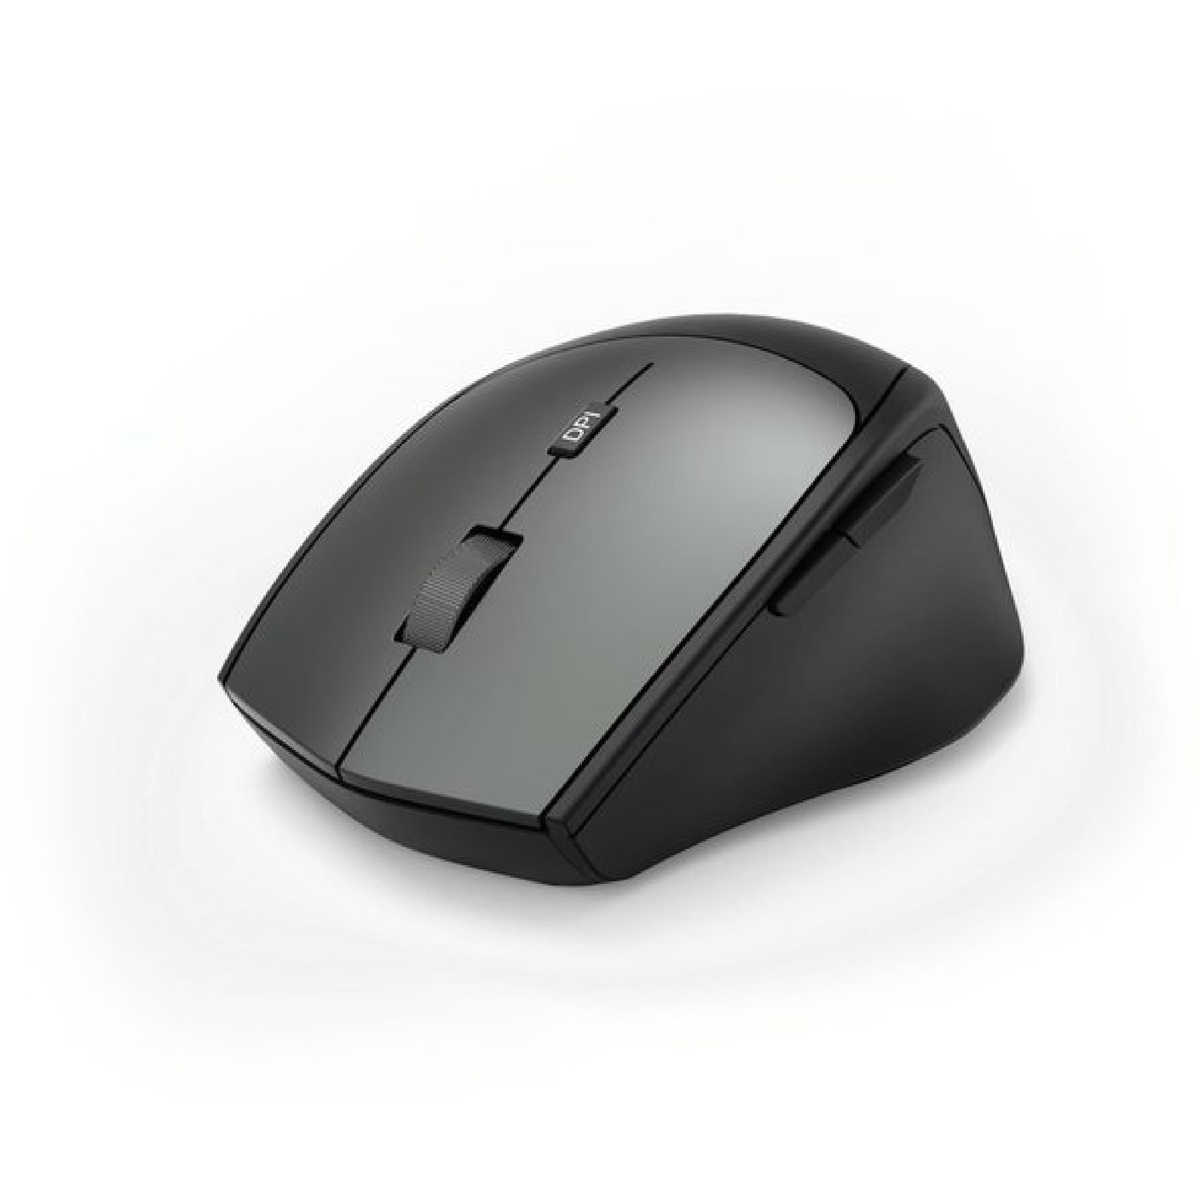 Hama KMW-700 Wireless Keyboard and Mouse Combo Black